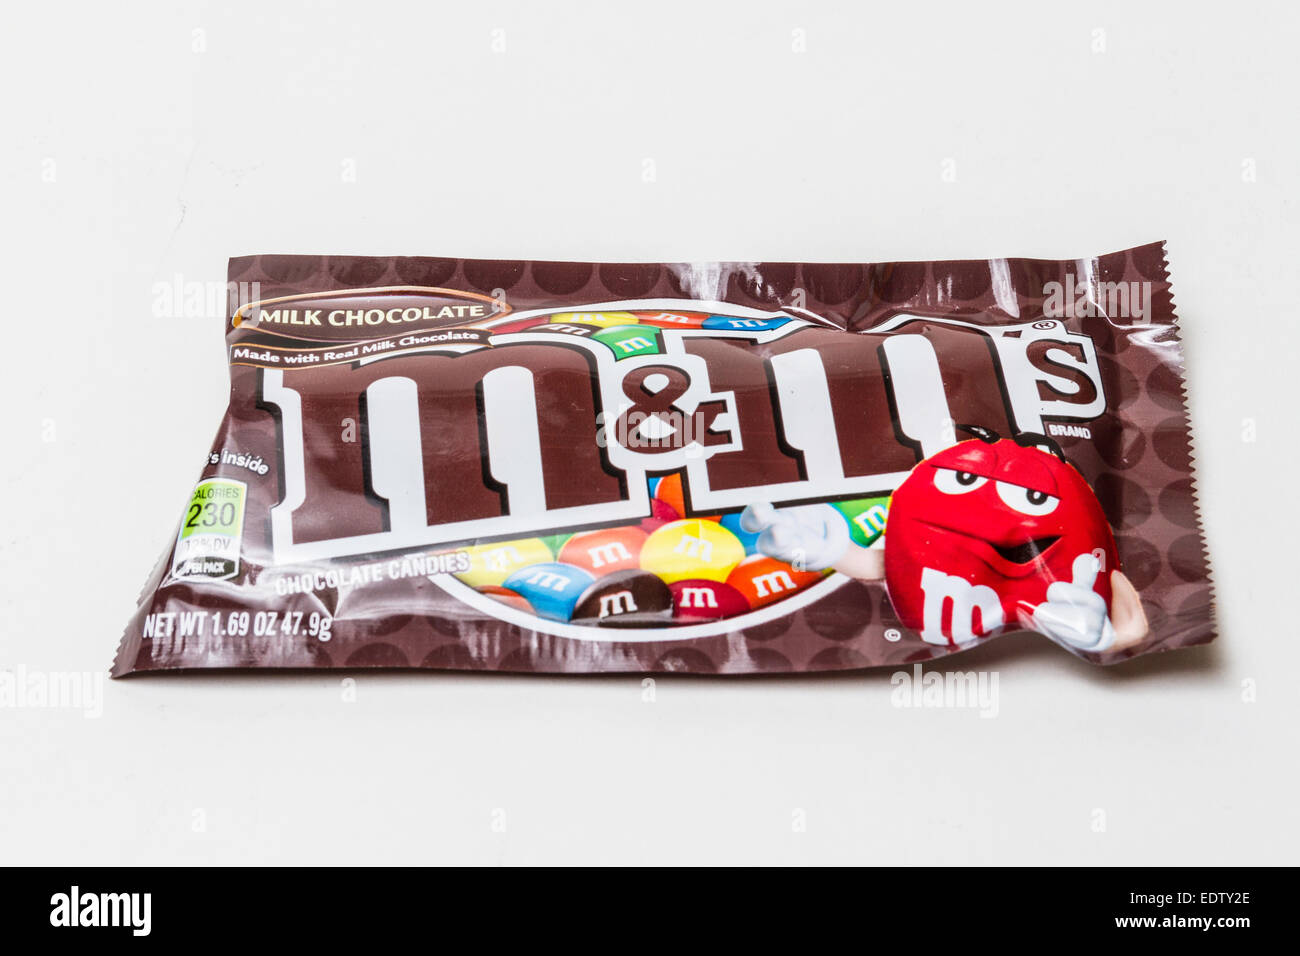 M&M`s Milk Chocolate Candies Editorial Stock Image - Image of closed,  nougat: 82561409